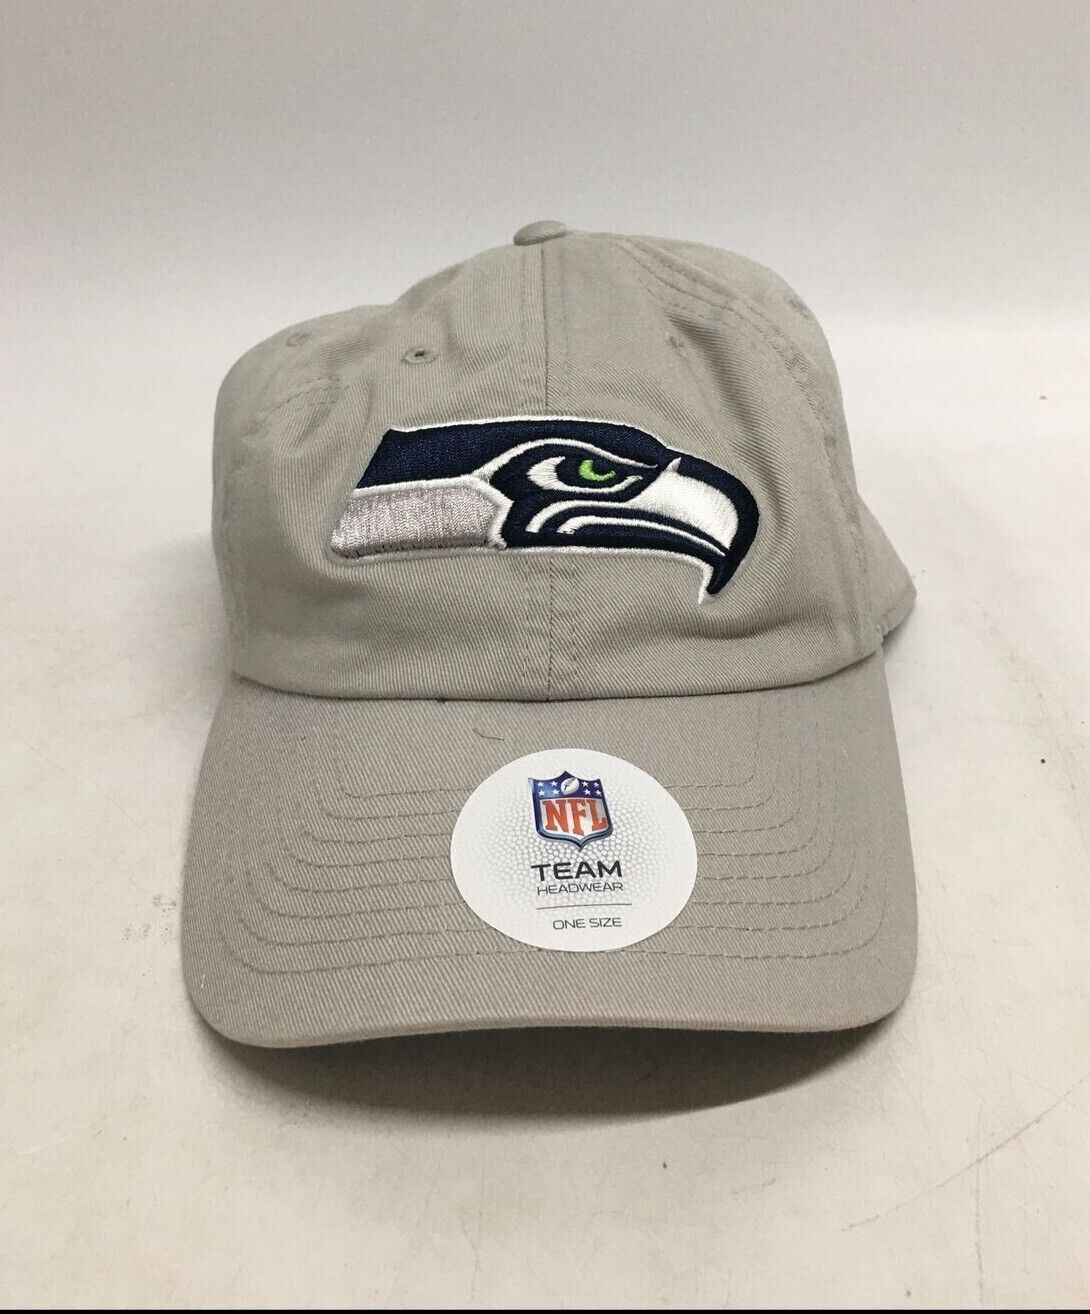 Seahawks NFL team store hat